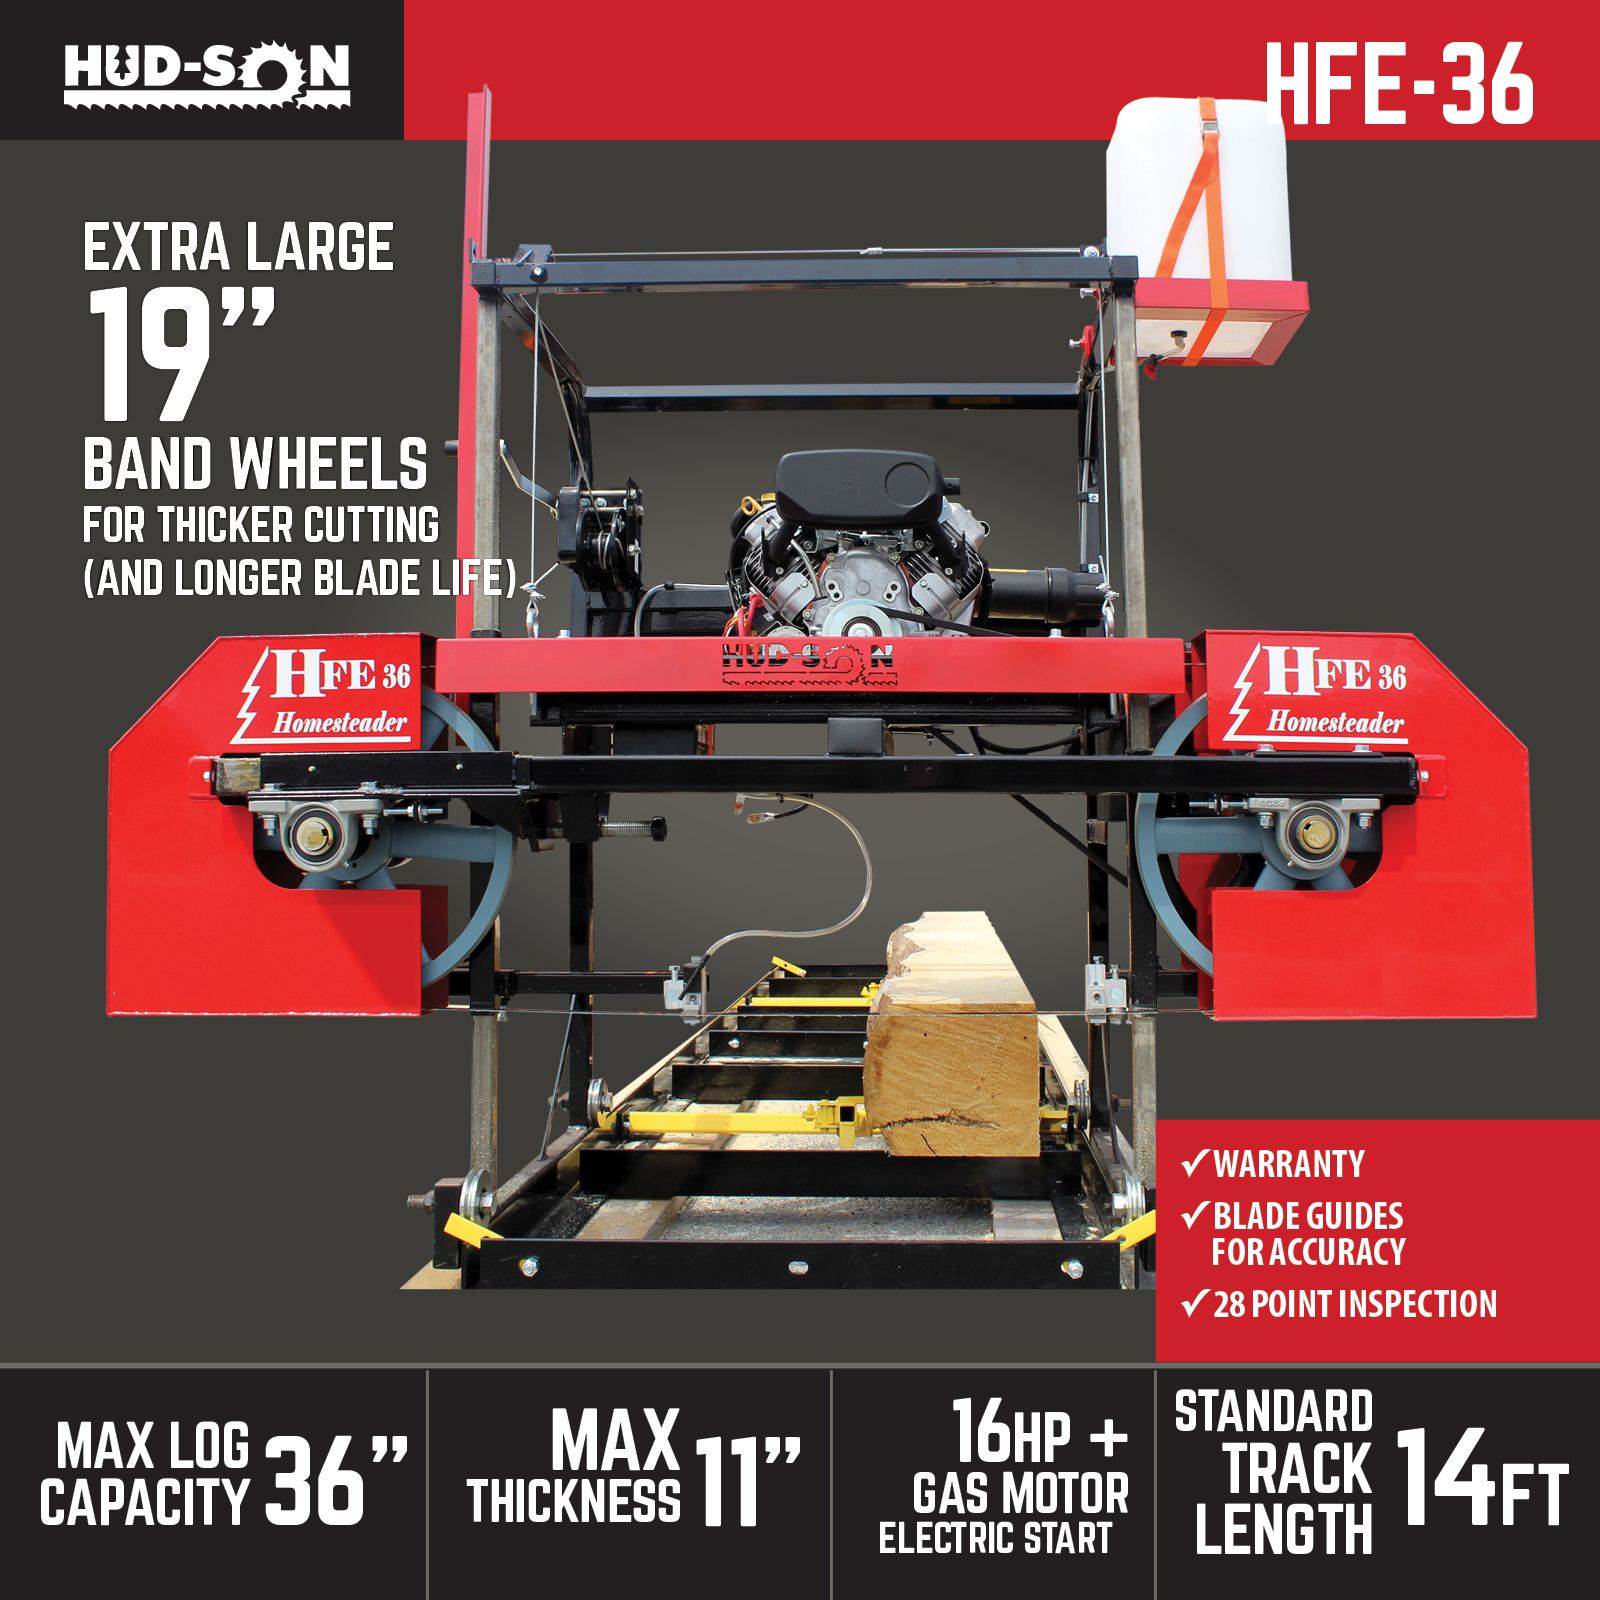 Hudson HFE-36 Sawmill Product specs